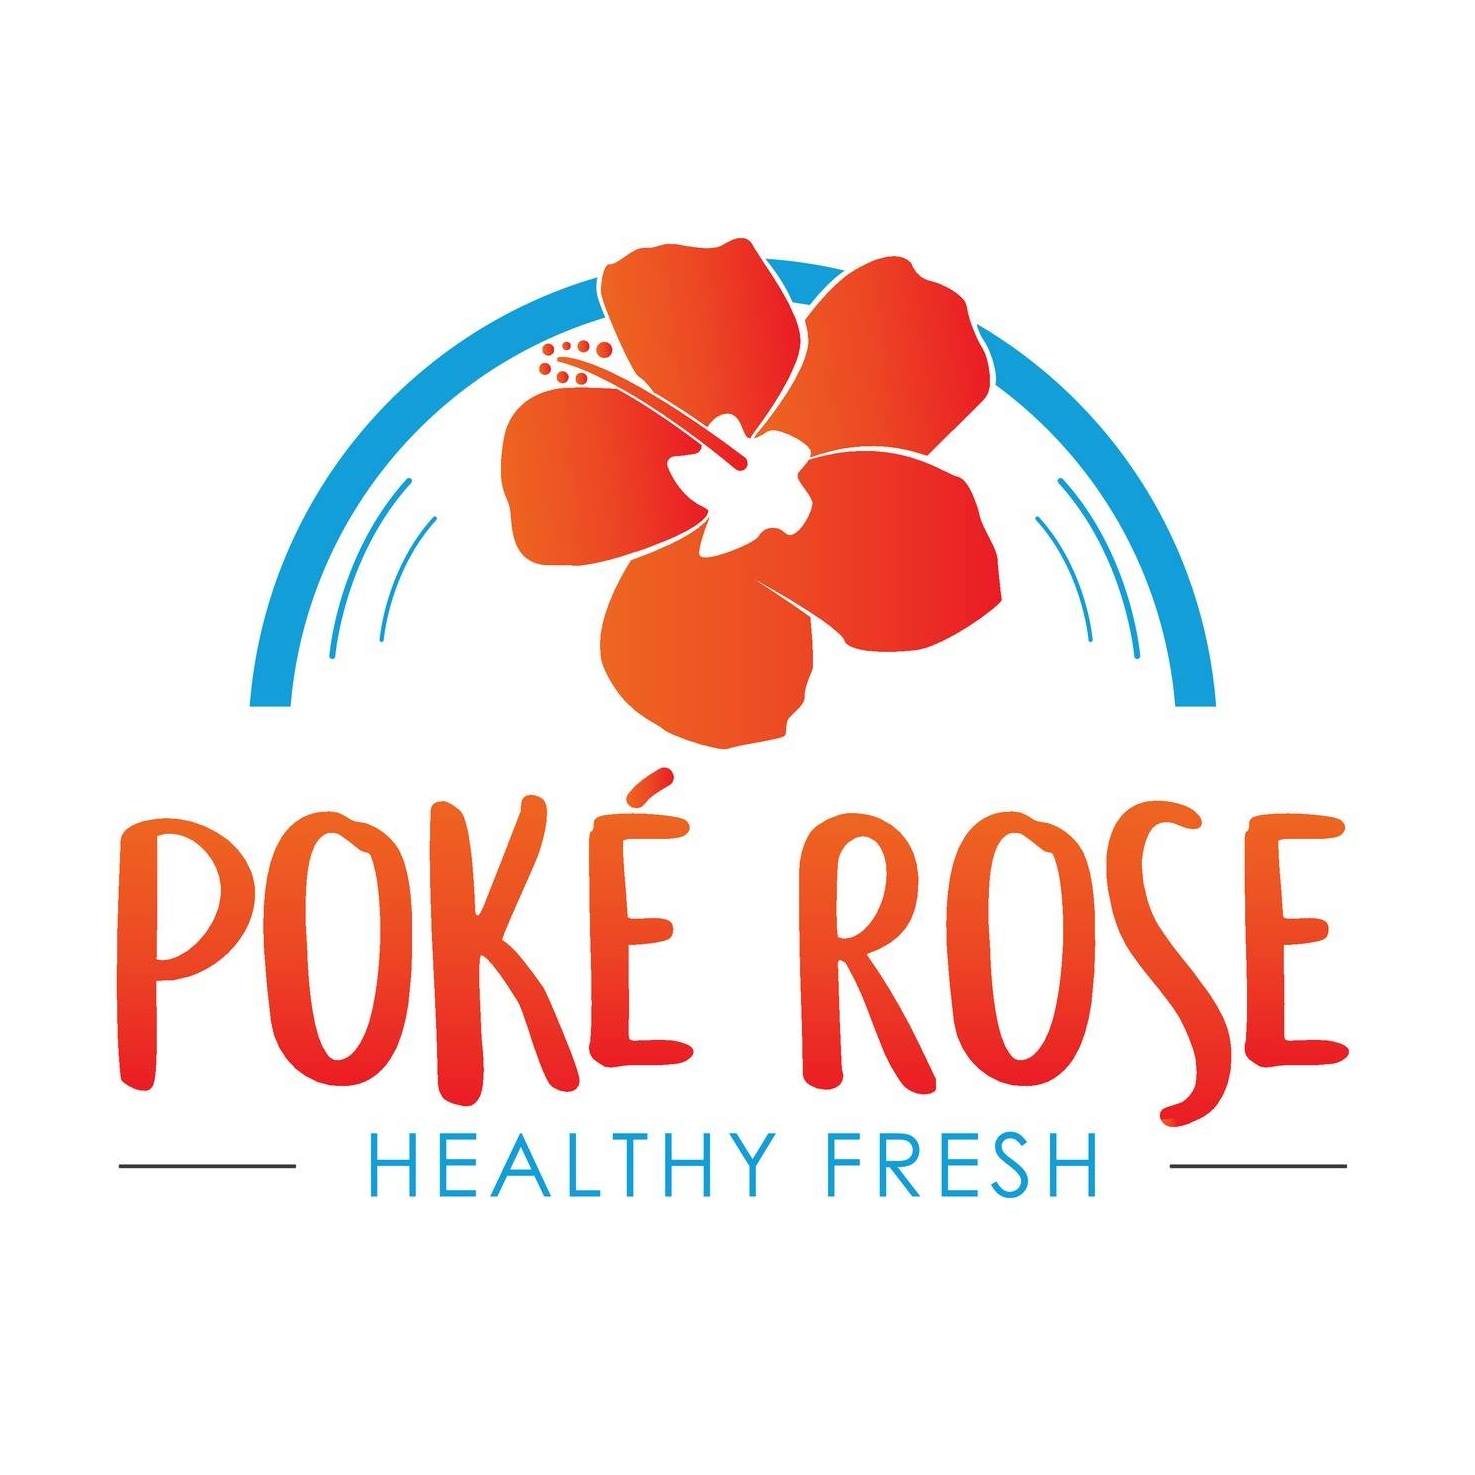 Chef Jason Cline Opens Poké Rose: Coming January 2017